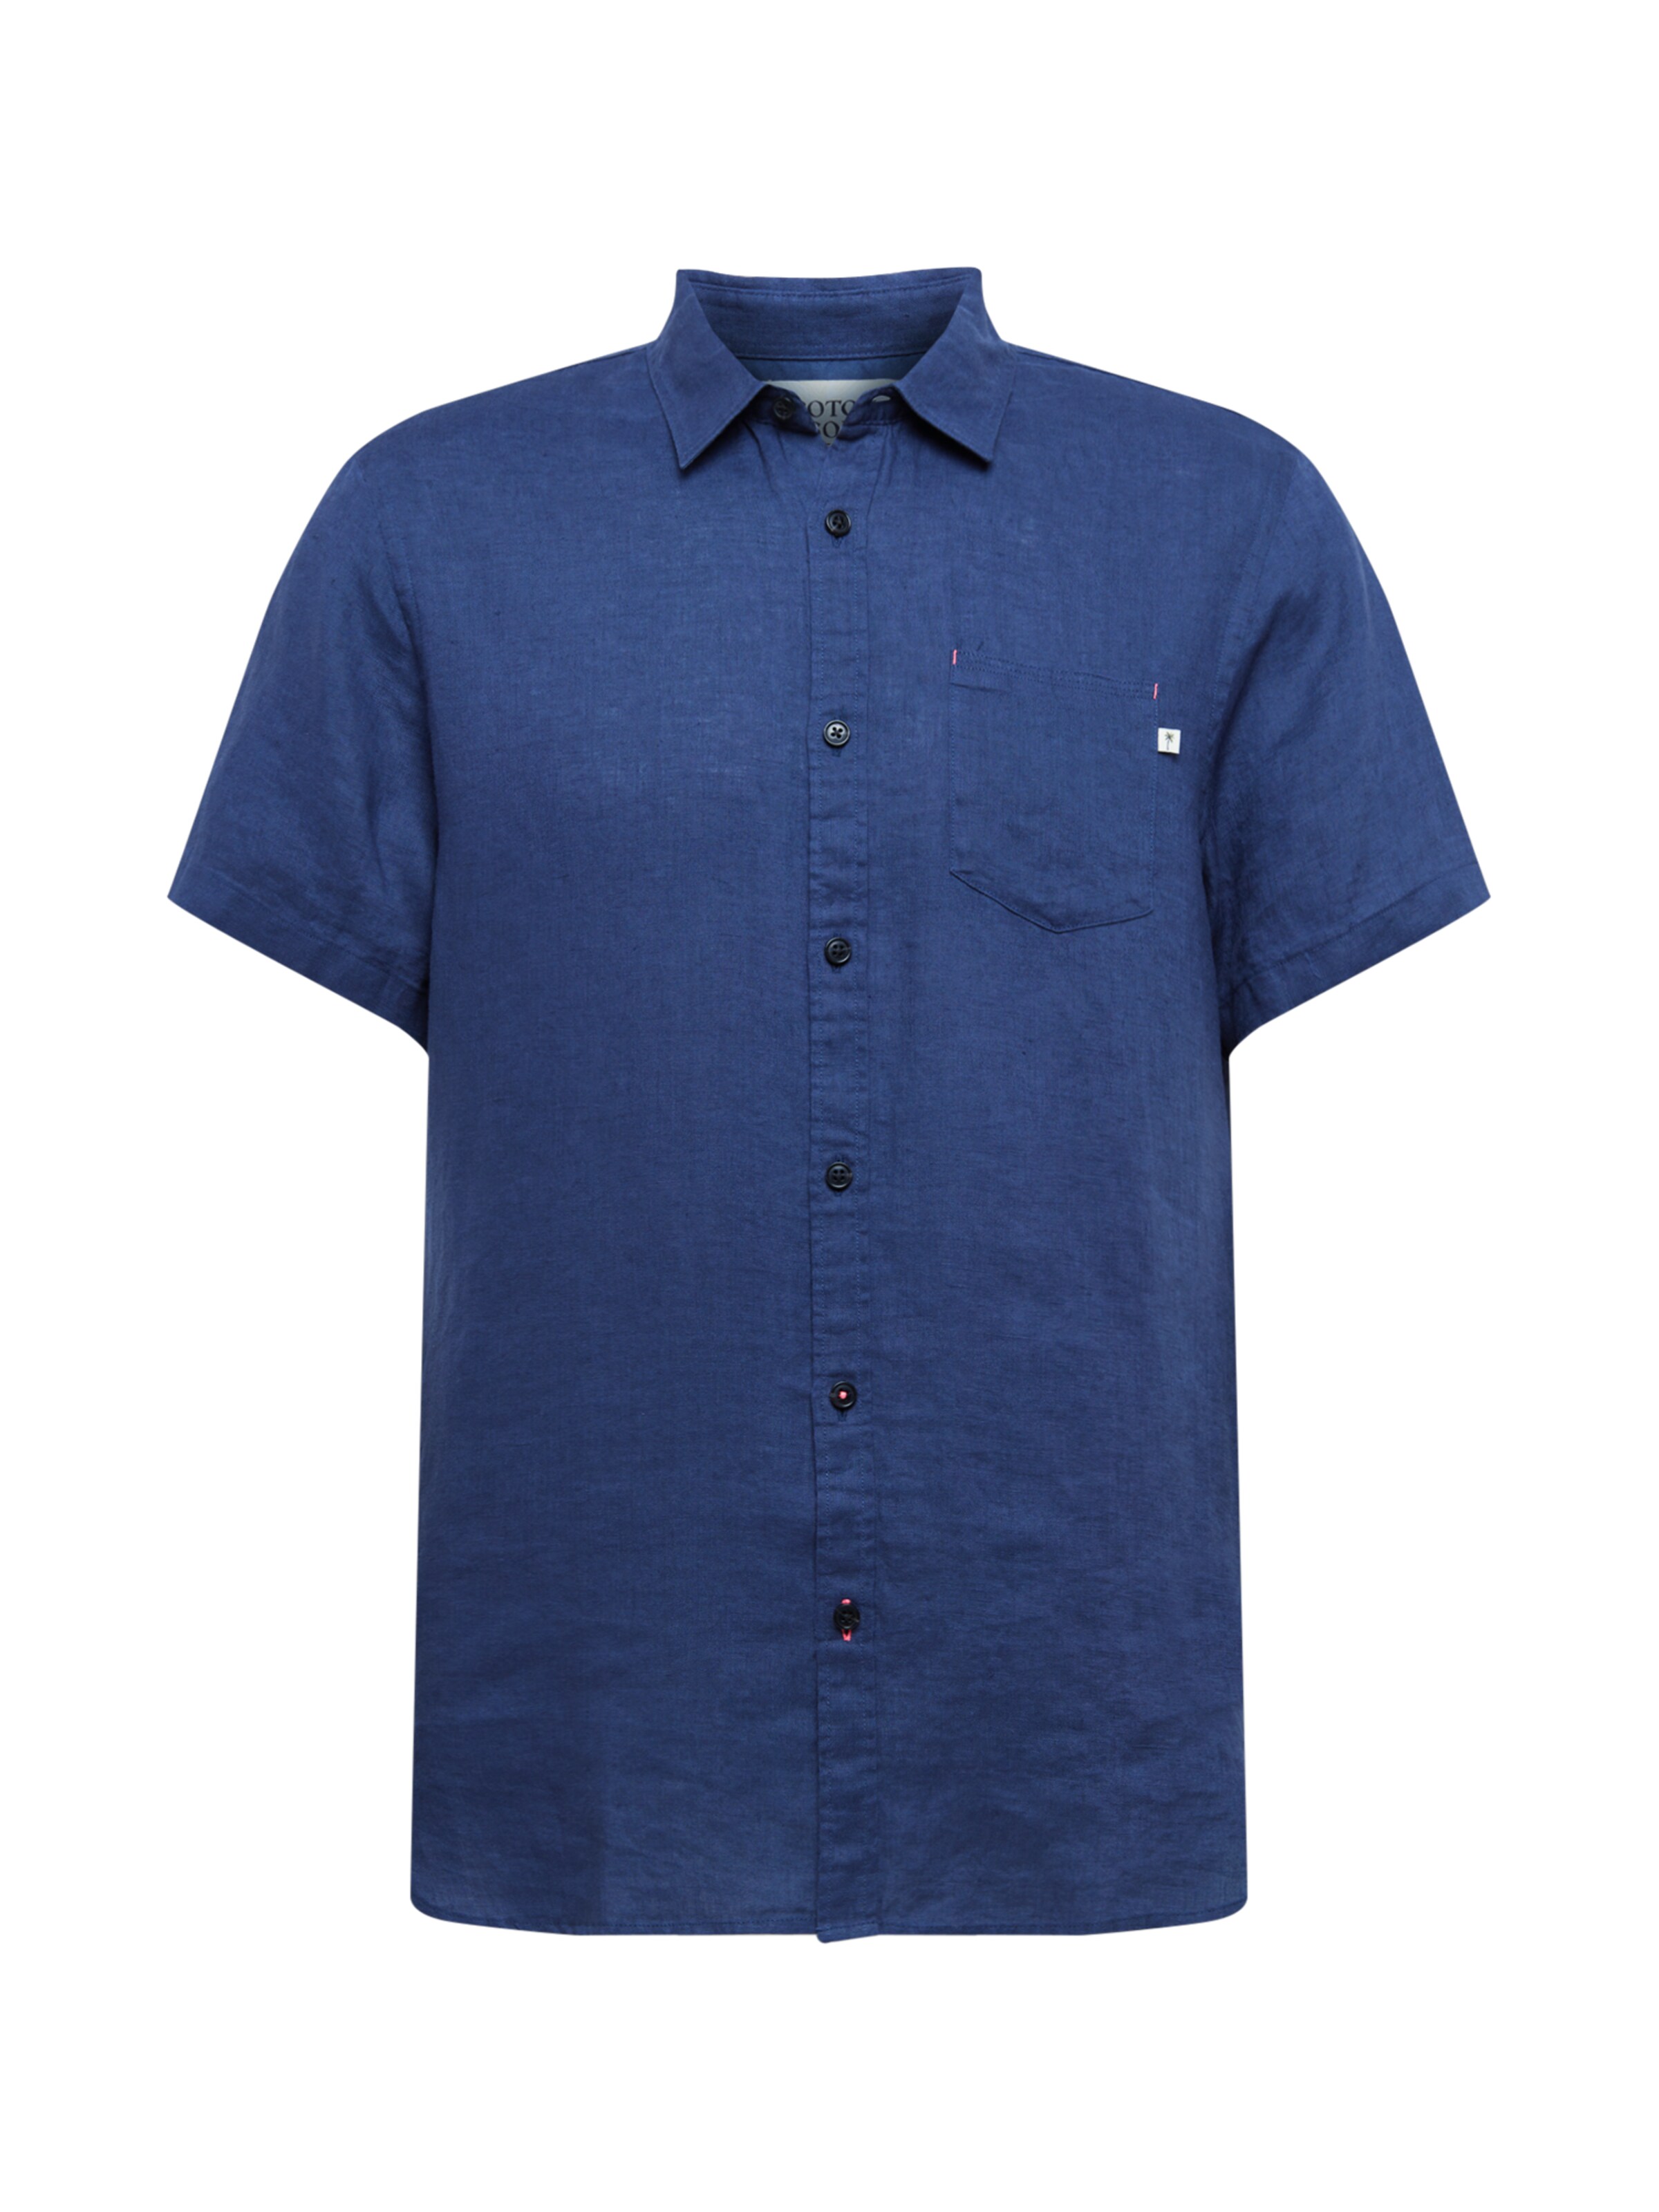 Männer Hemden Woodbird Hemd in Blaumeliert - TT78310